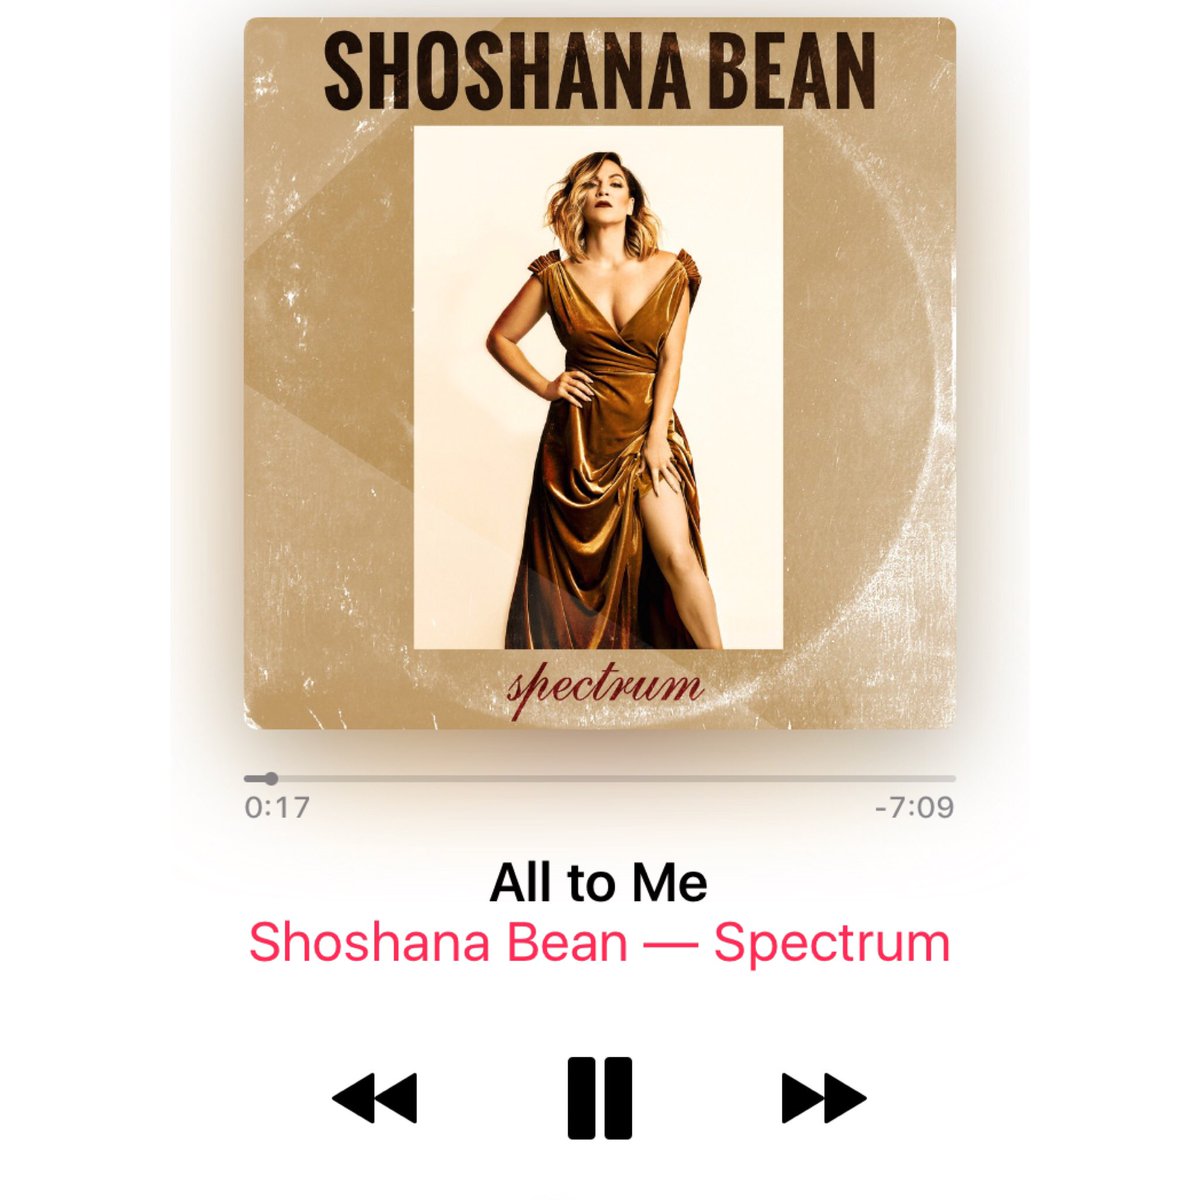 Beyond proud of you my friend. U are truly amazing. Love you @shobean. #shoshanabean #shobean #spectrum #pledgemusic #allofme #newmusic